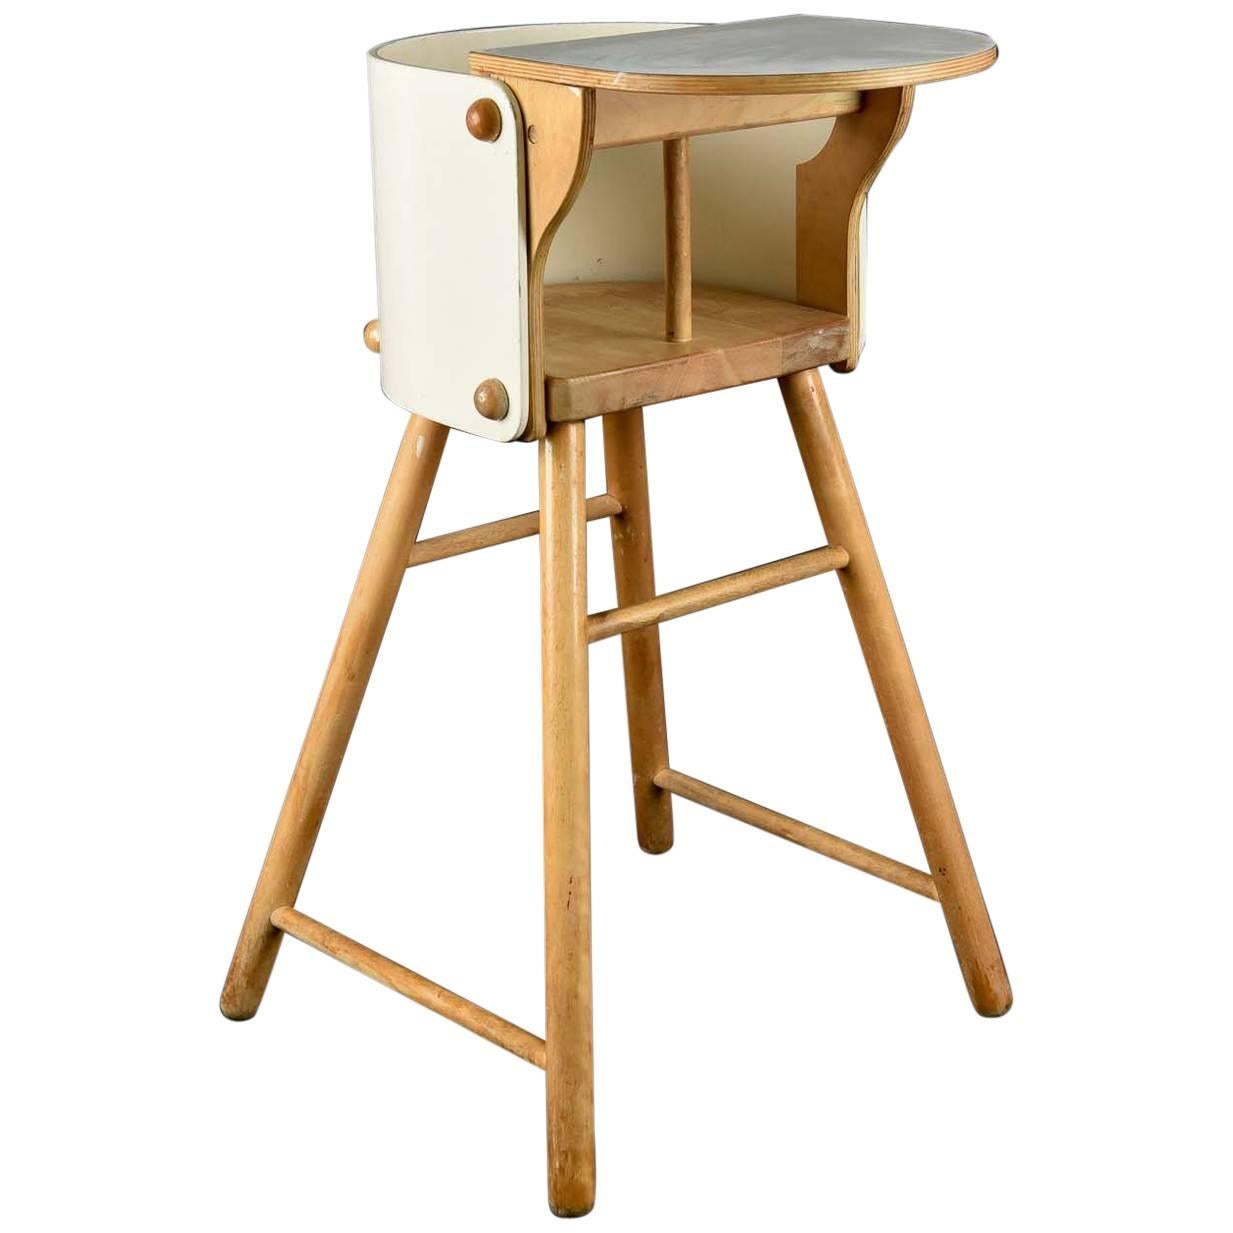 Ben af Schulten for Artek Model 616 Child's High Chair, 1960s